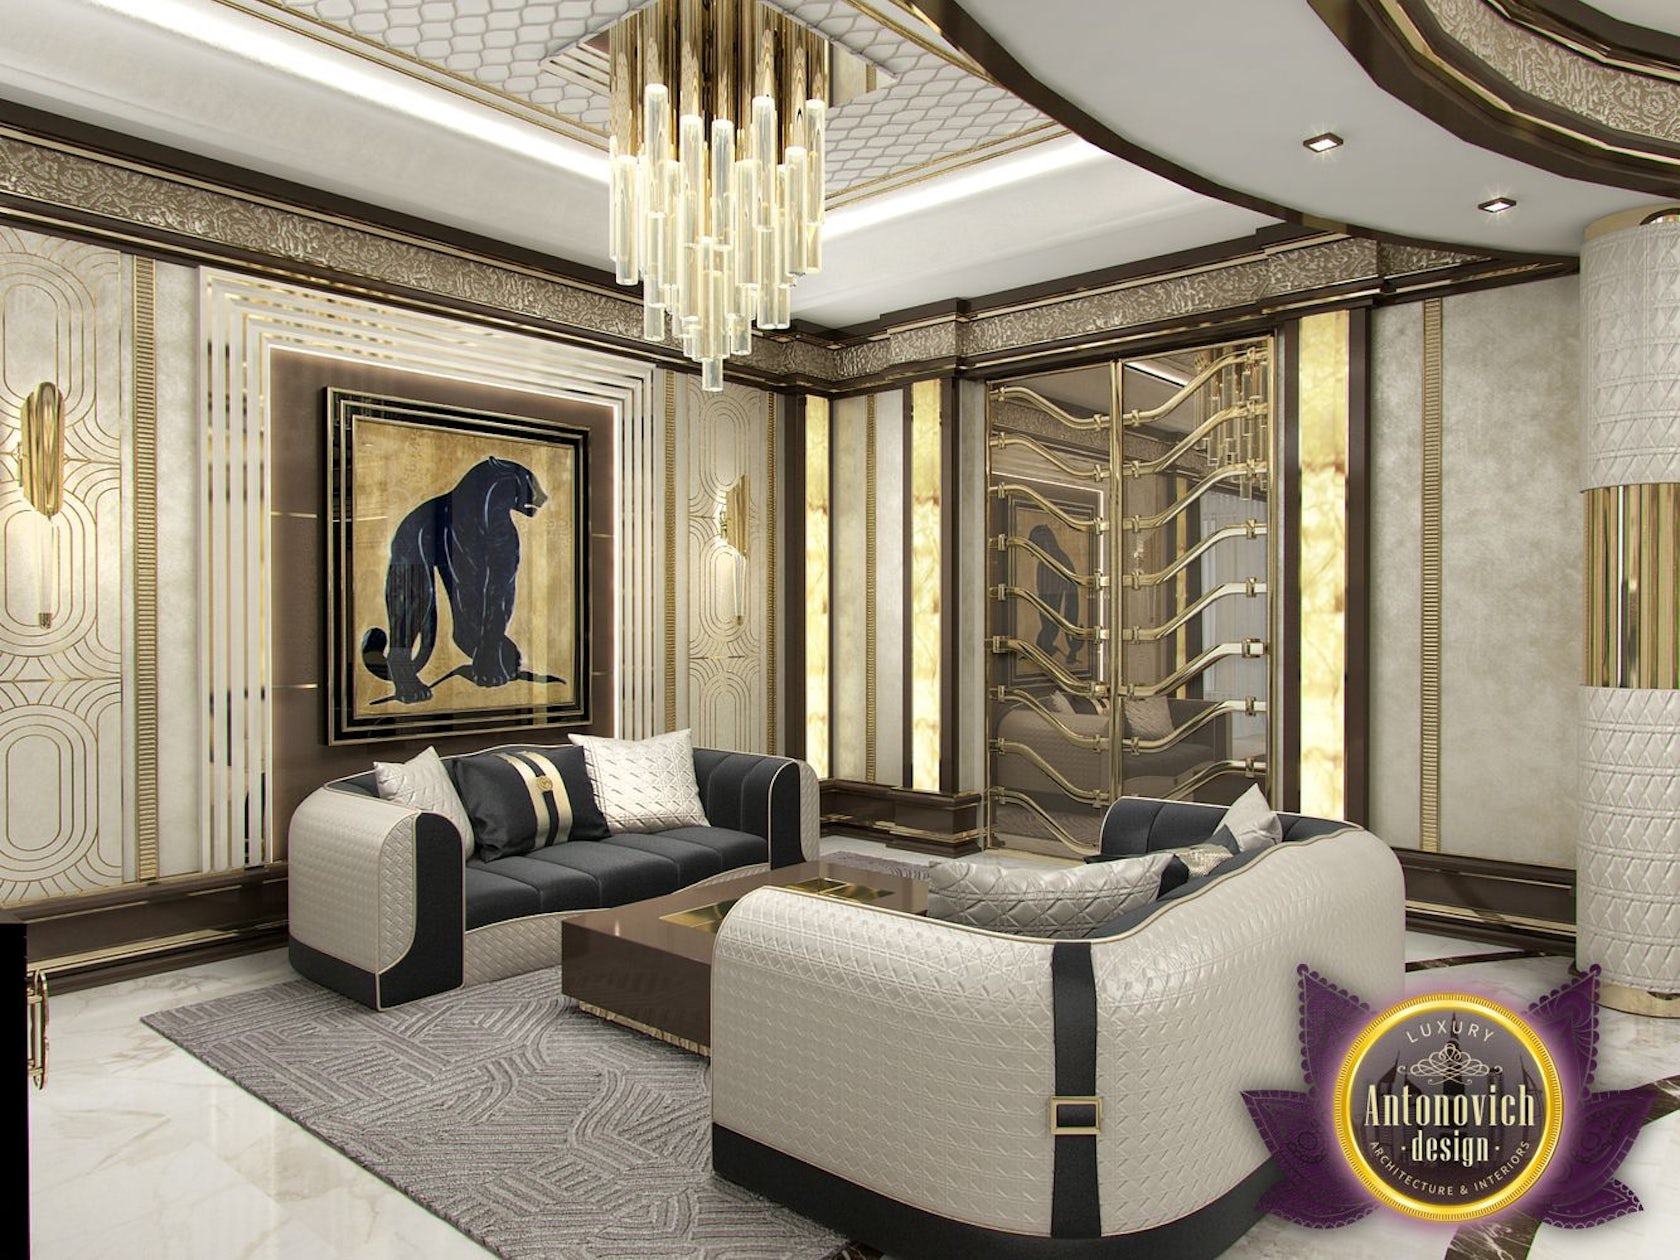 Master Bedroom In Modern Style Luxury Antonovich Design By Luxury Antonovich Design Architizer